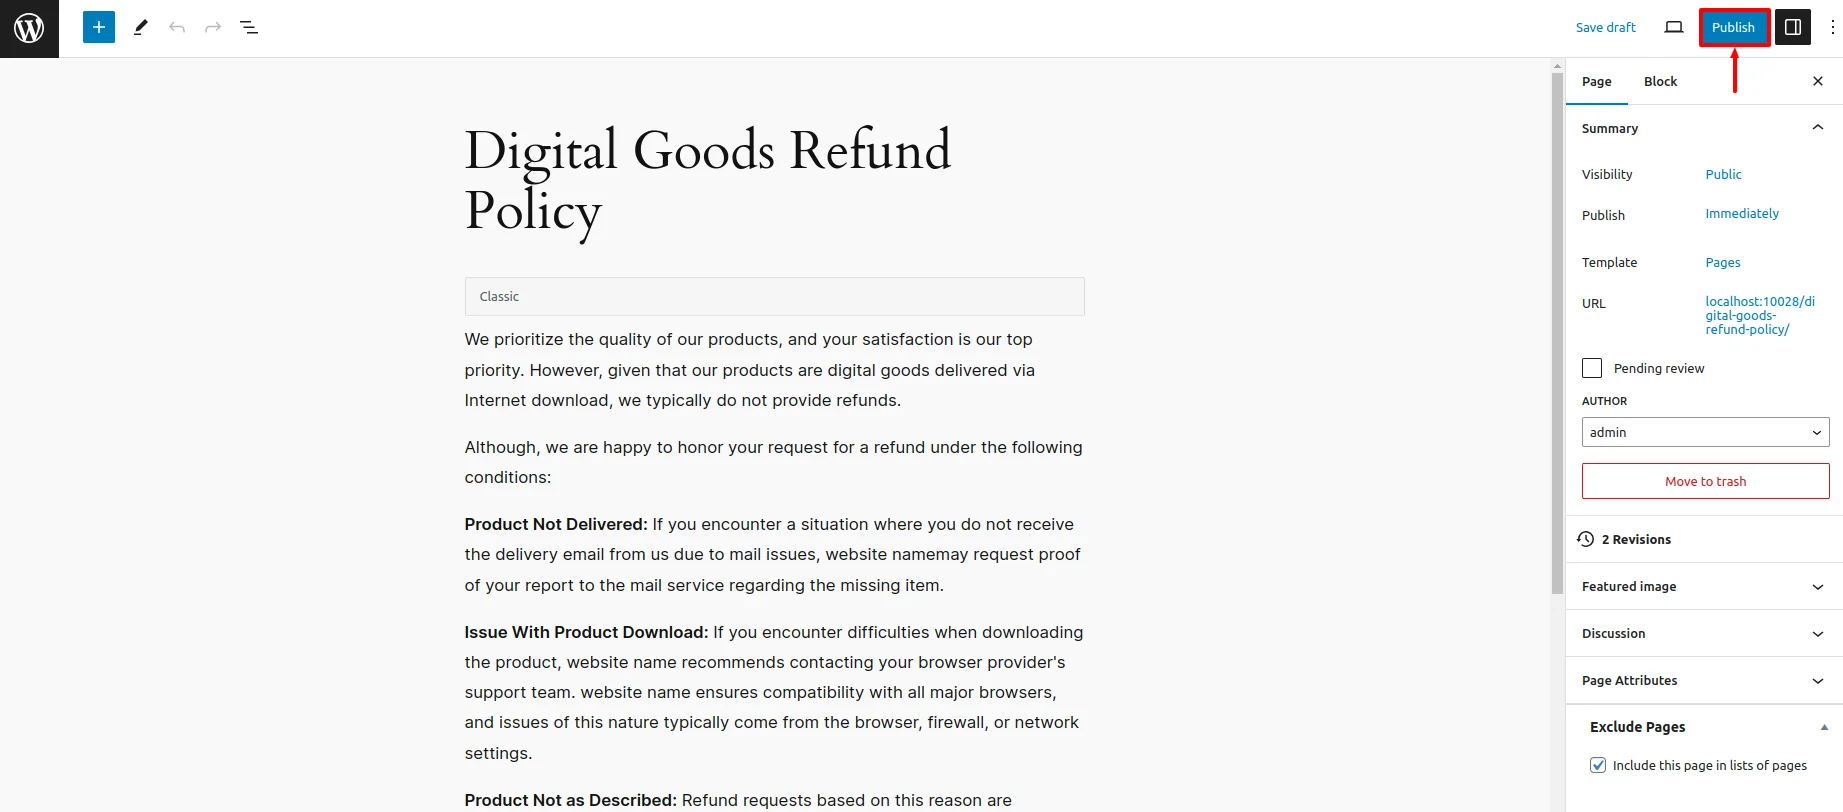 Publishing digital goods refund policy